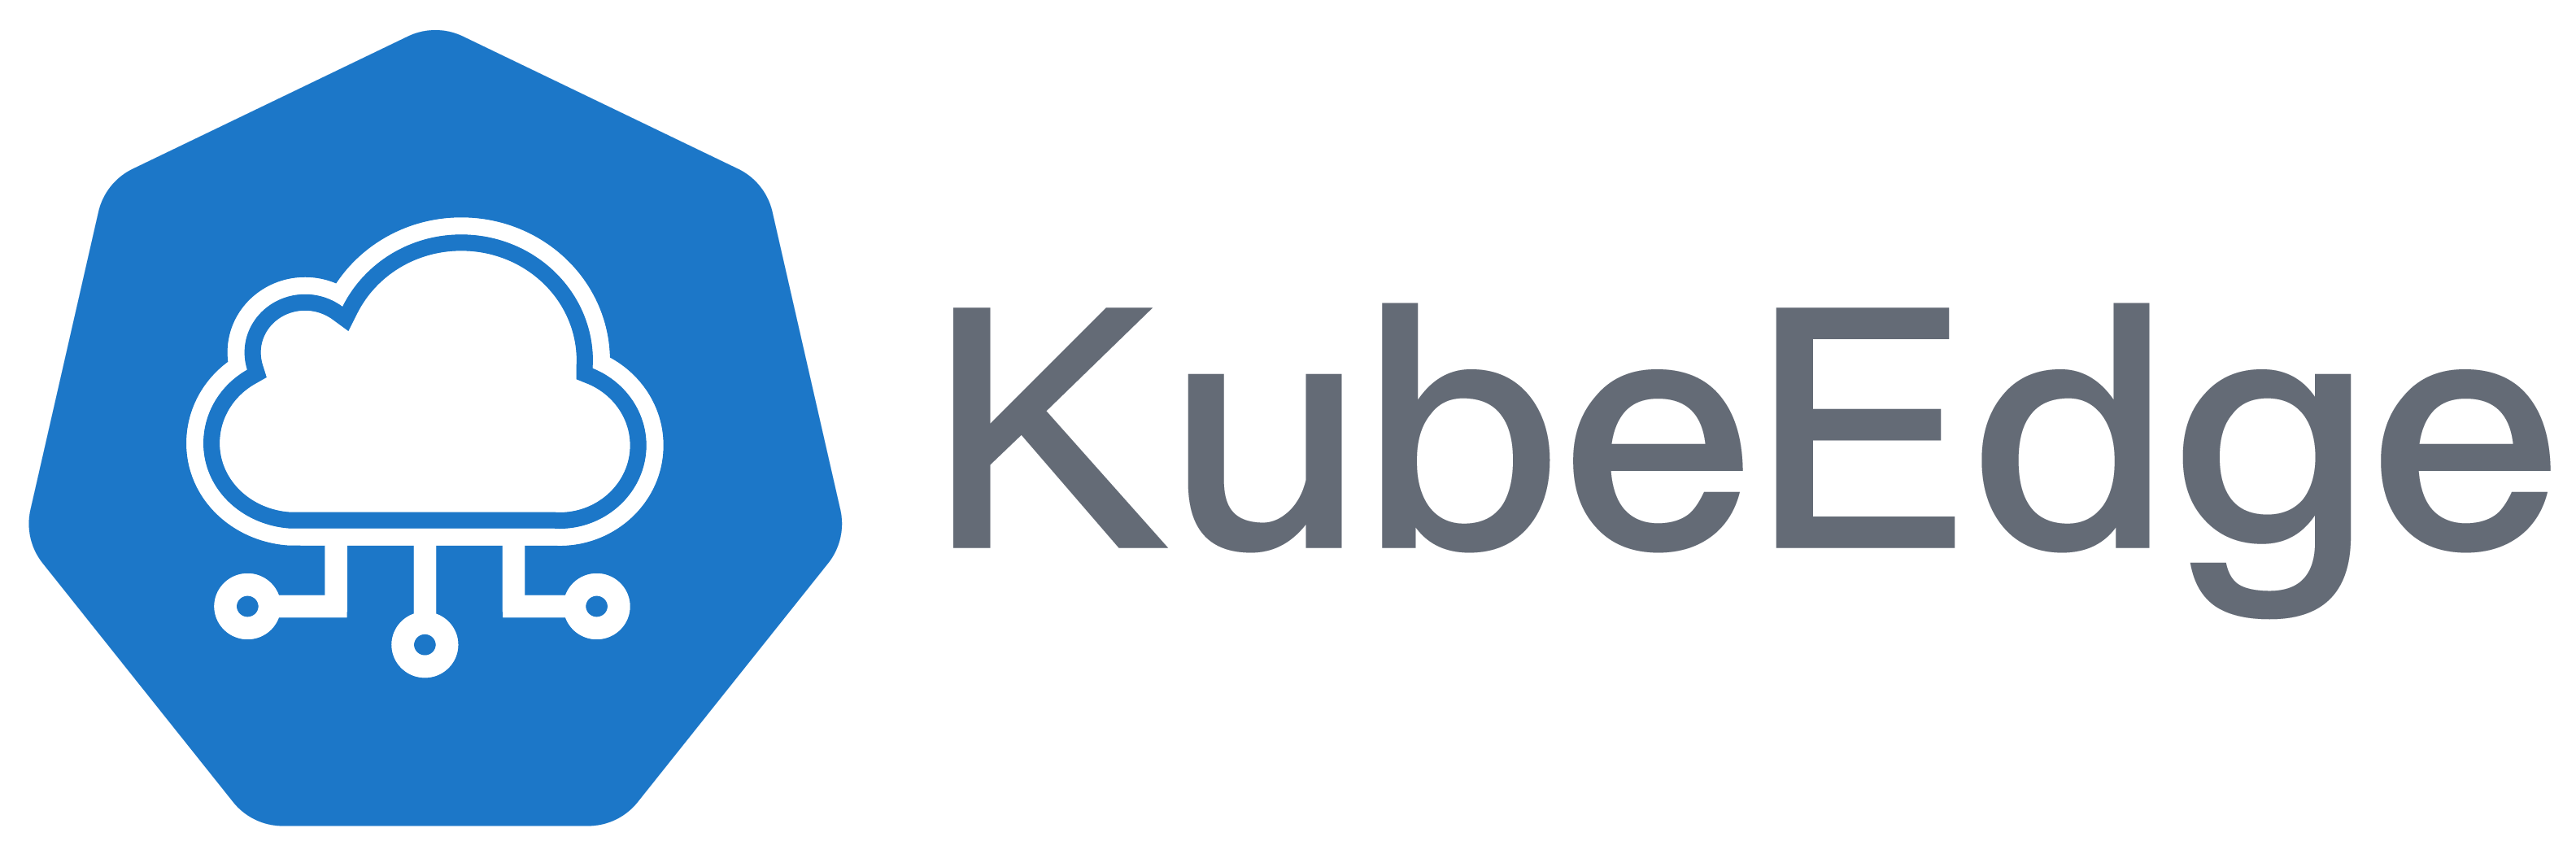 KubeEdge一个支持边缘计算的开放平台